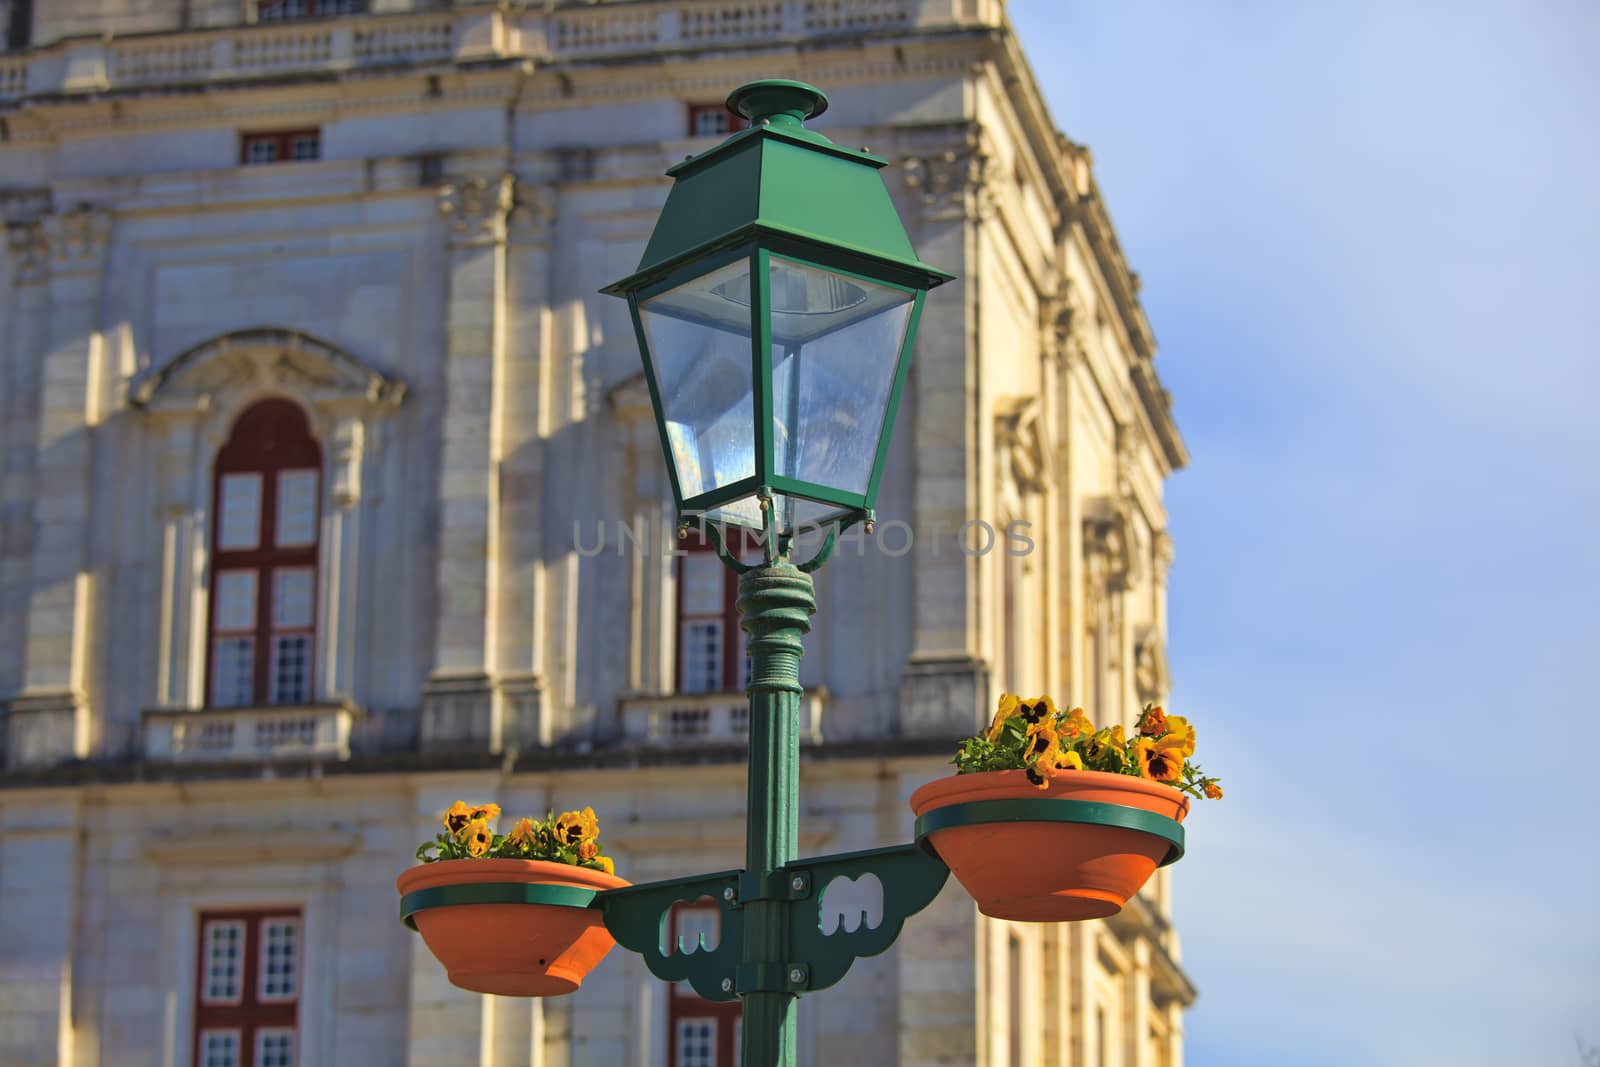 Typical metal street lamp at Mafra (Portugal) by kalnenko